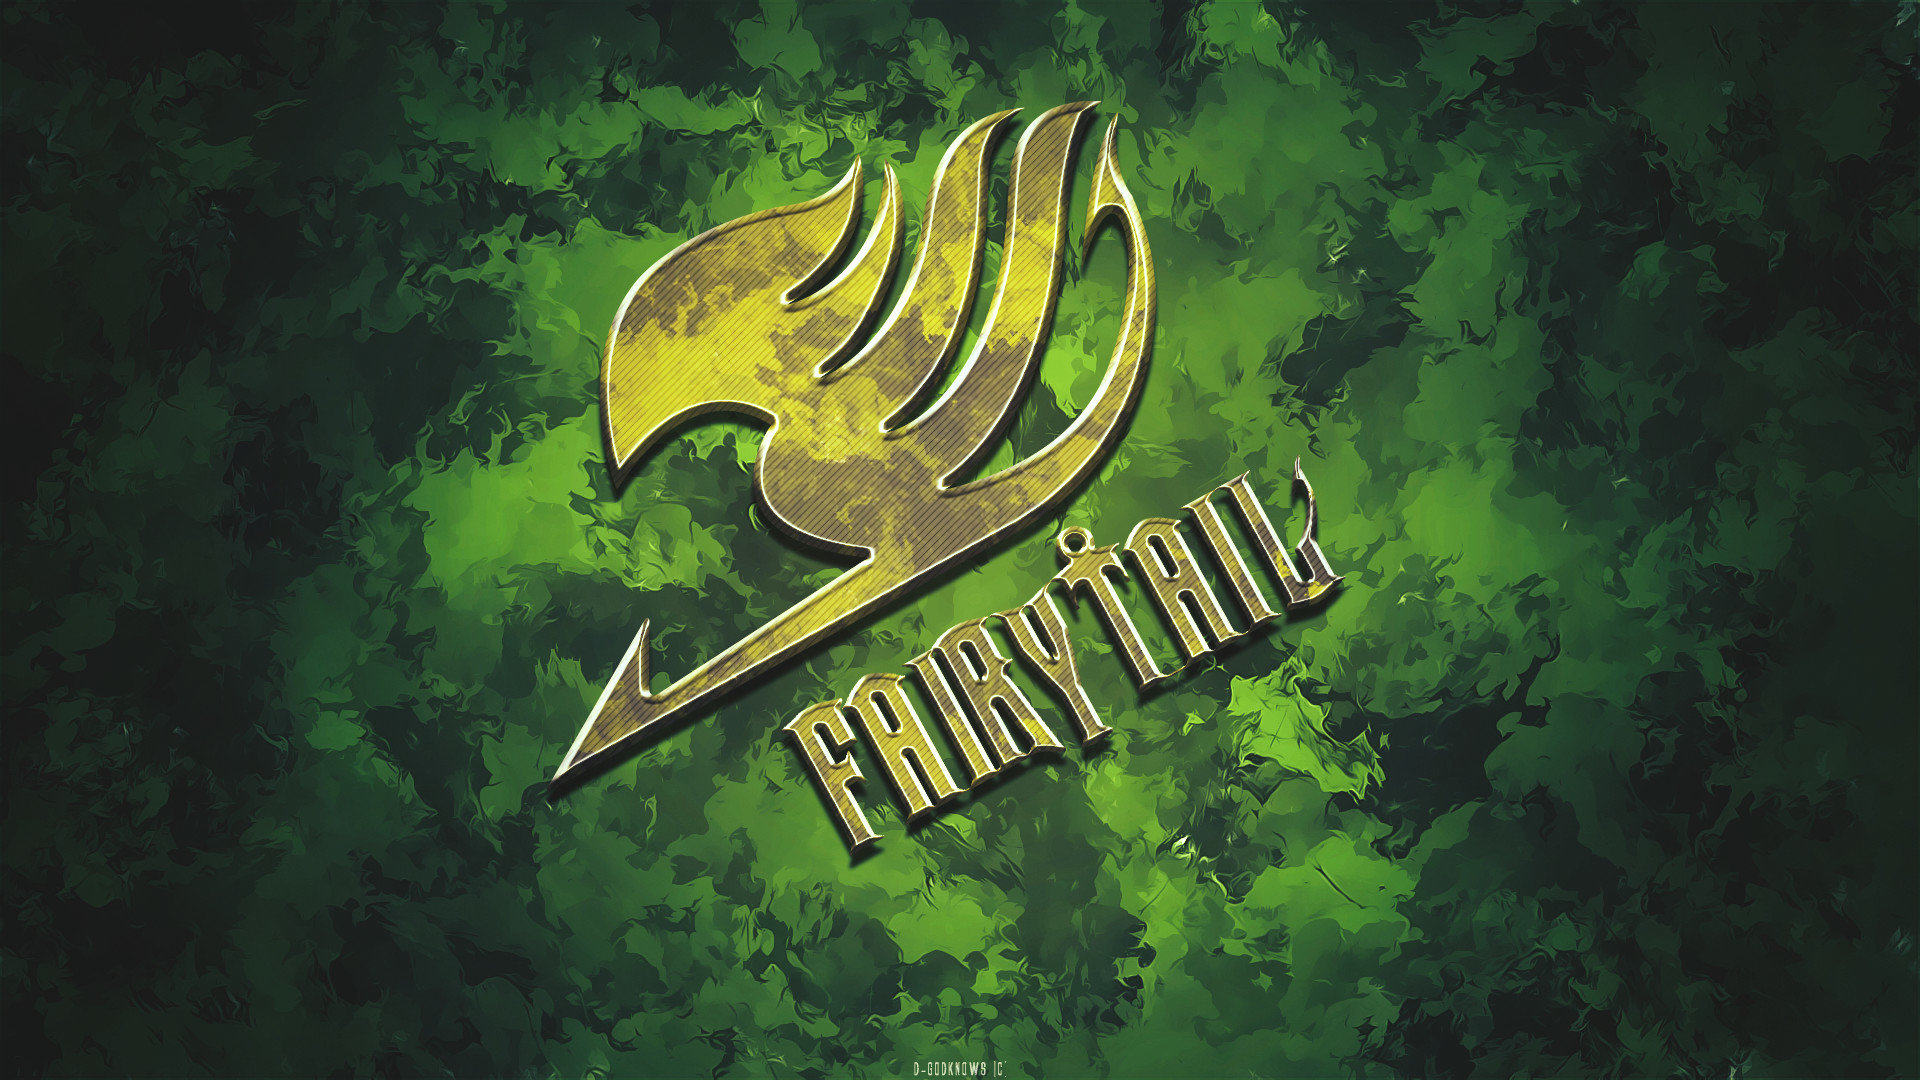 Fairy Tail wallpaper 1920x1080 Full HD (1080p) desktop background